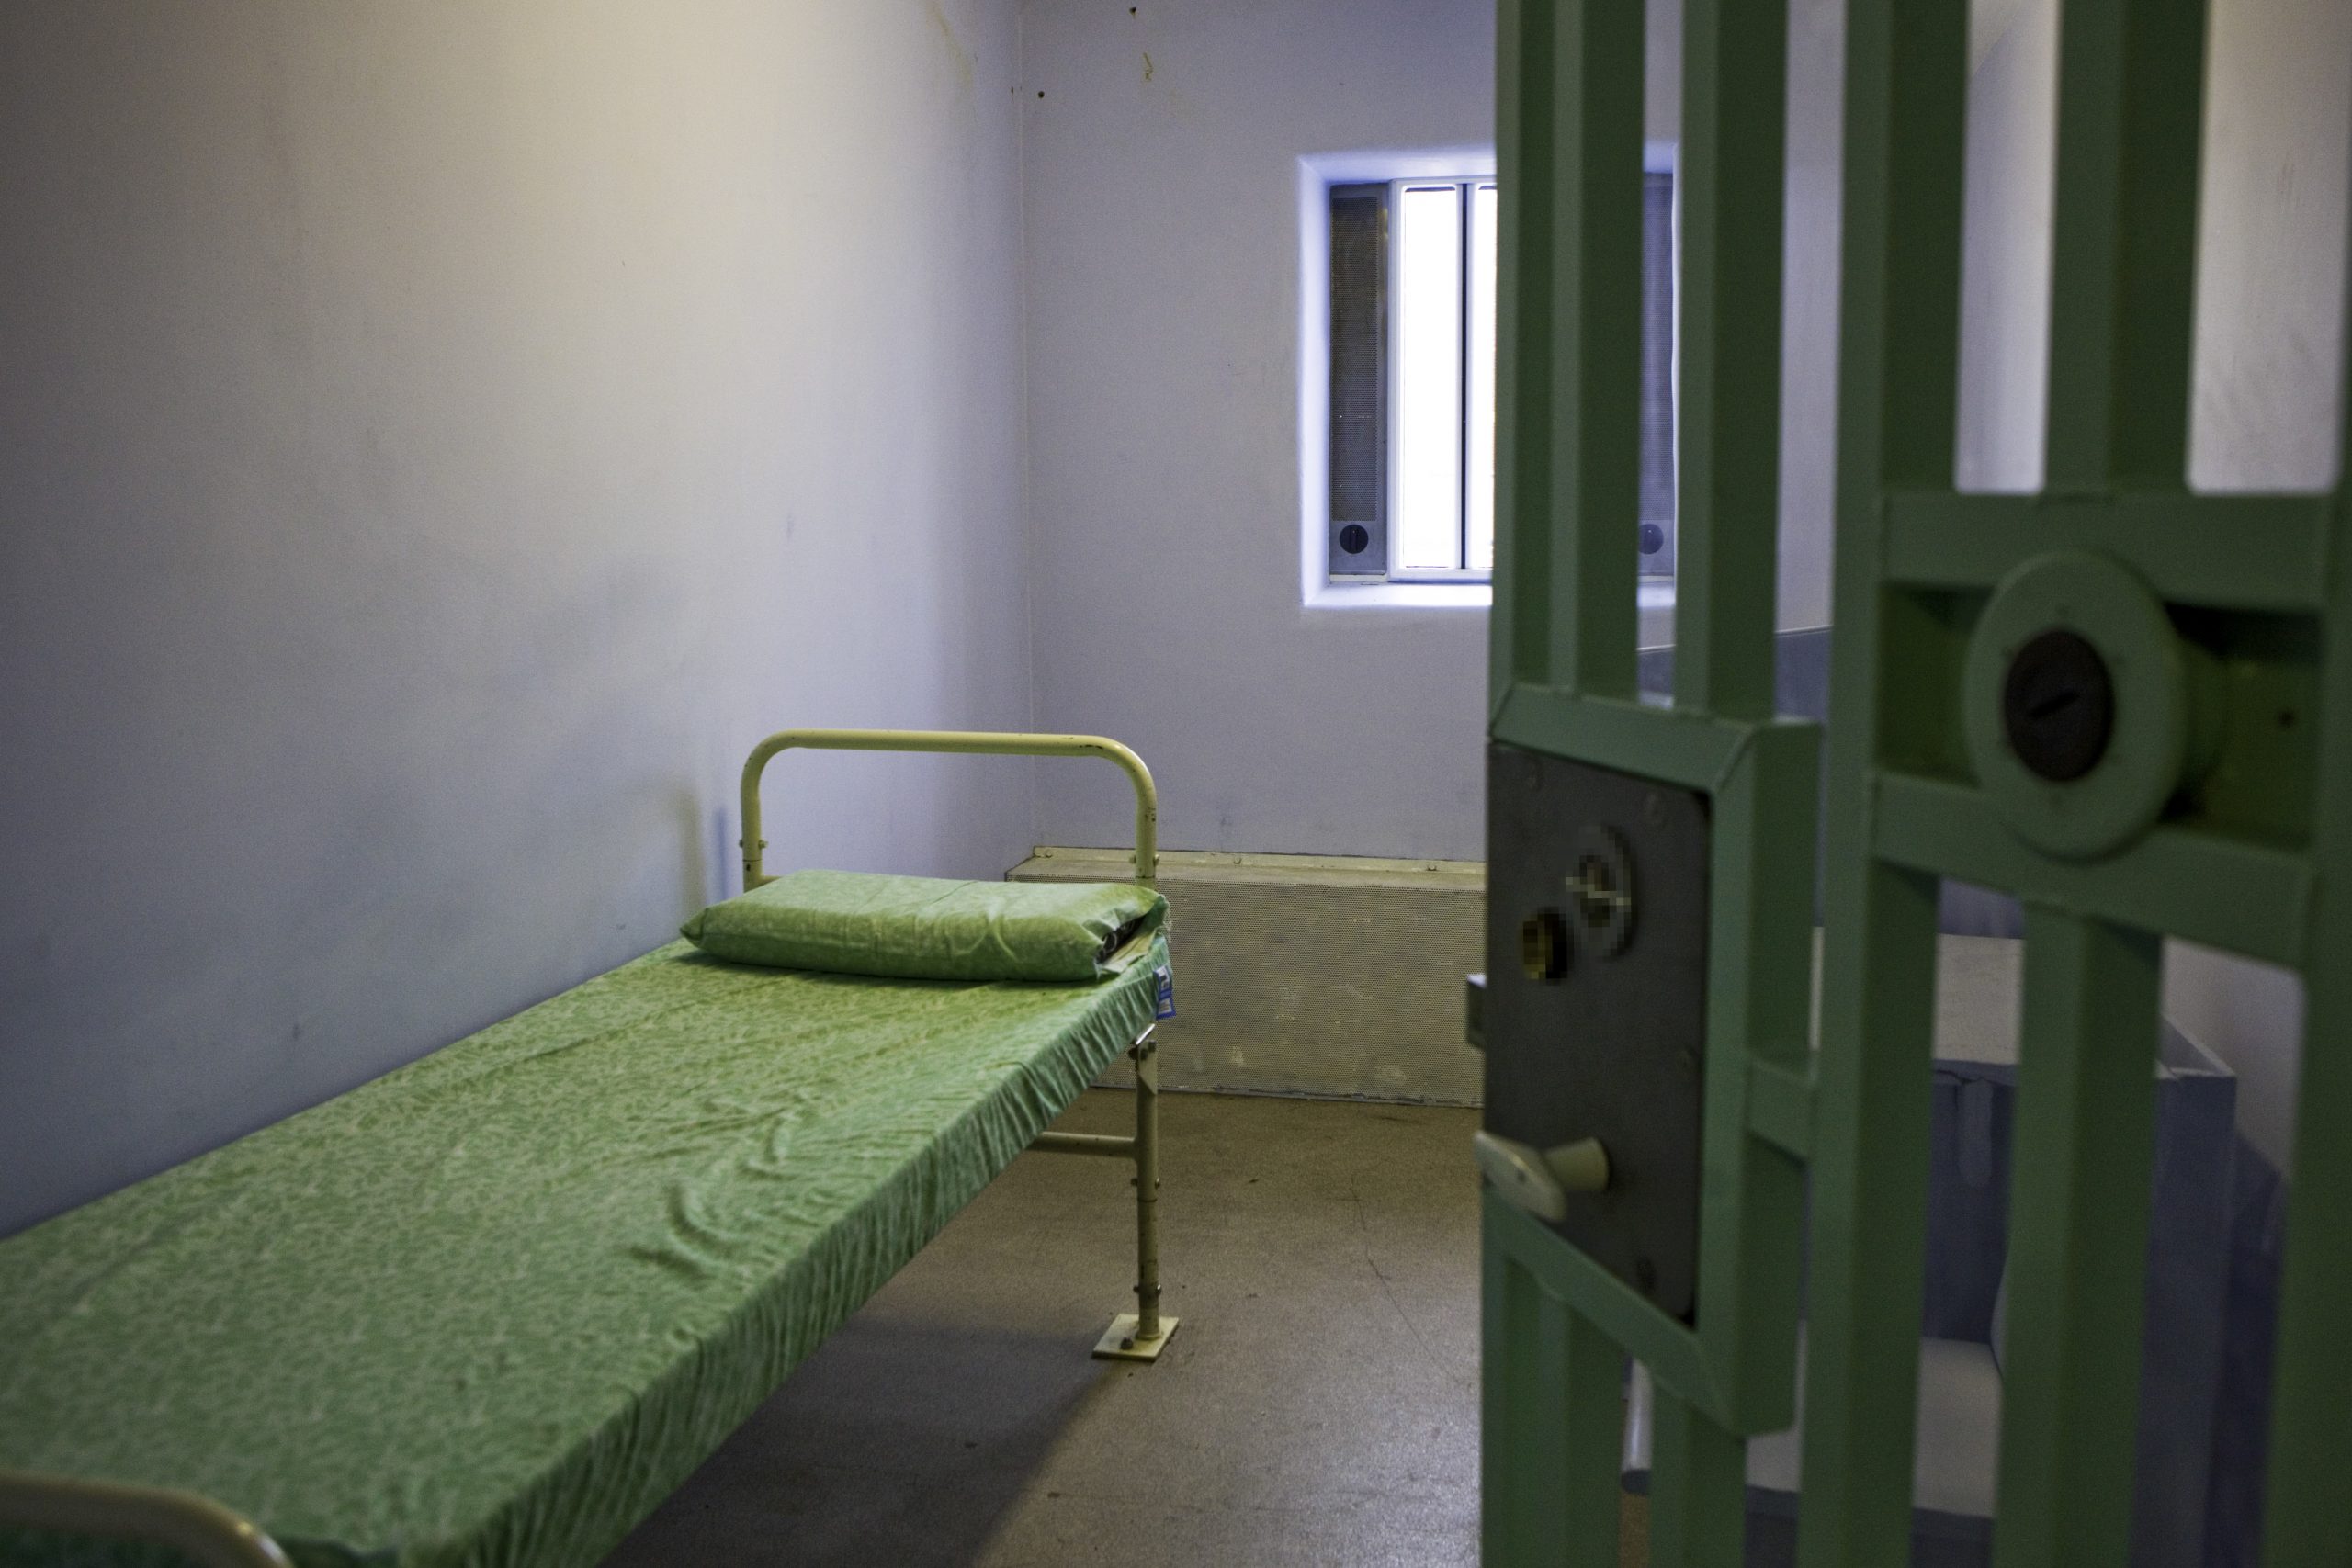 Prisoners held in inhumane segregation 'simply wrong and must cease'